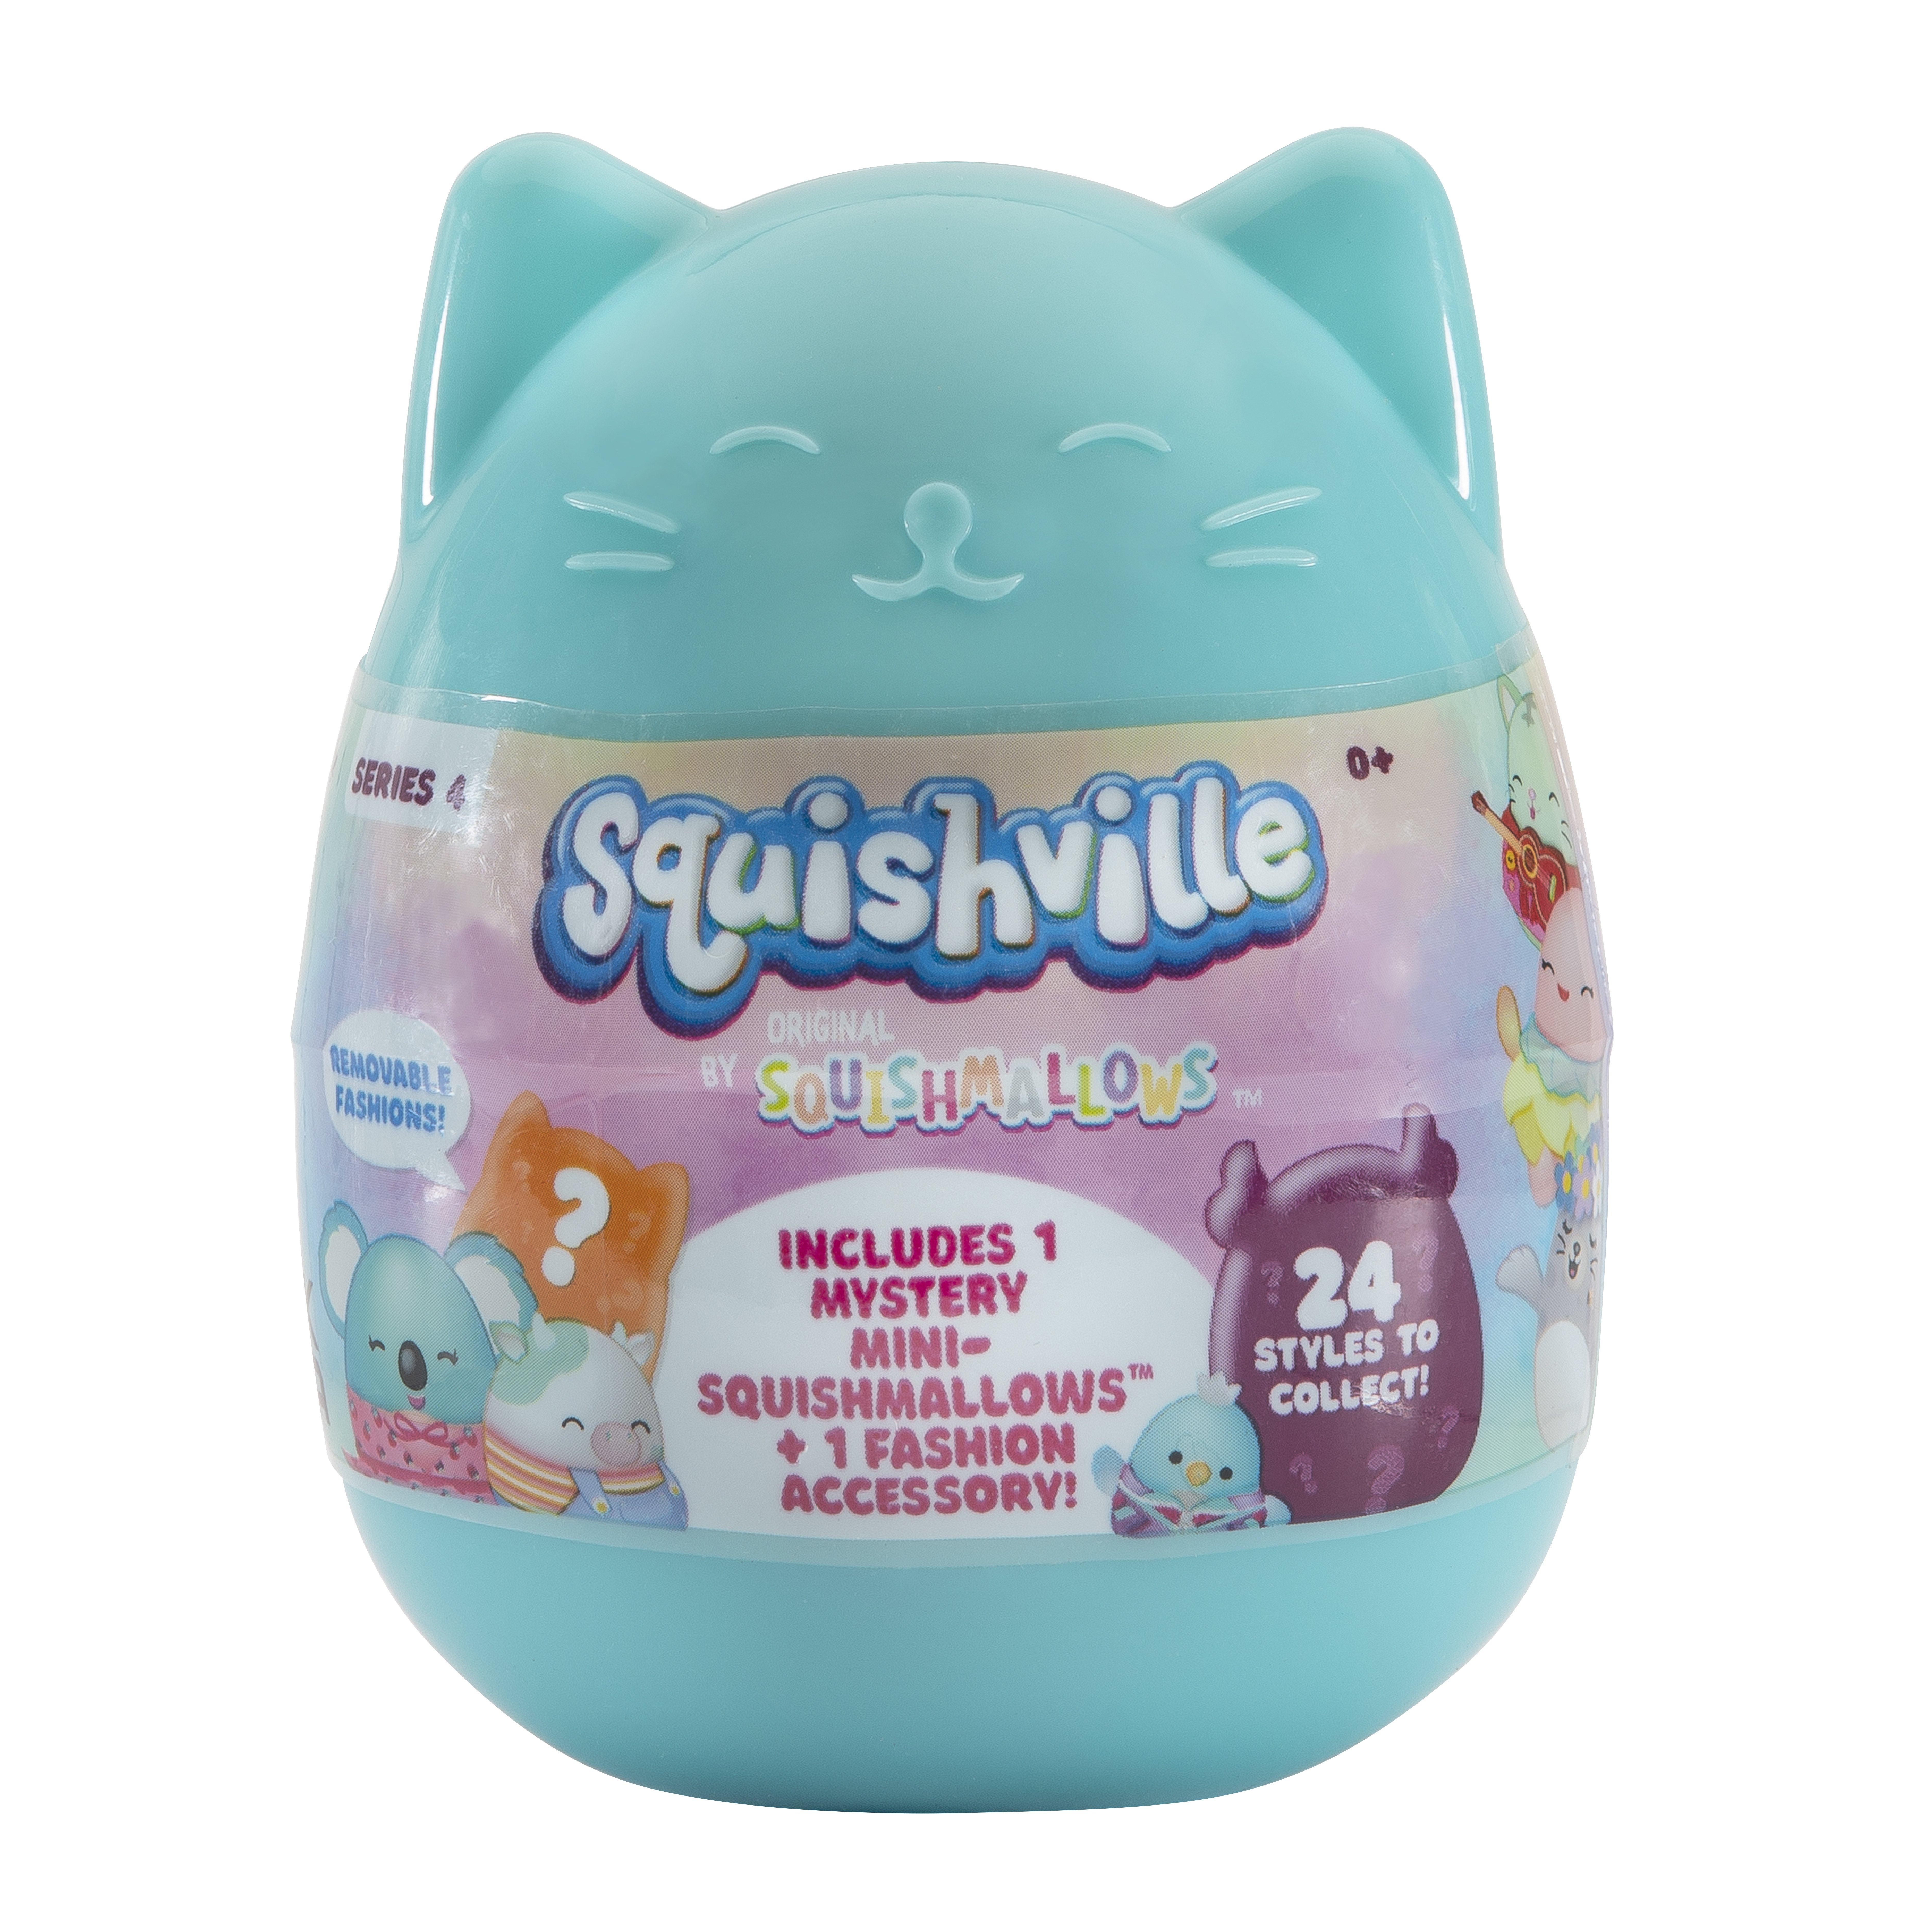 Squishville by Original Squishmallows (@squishville) / X